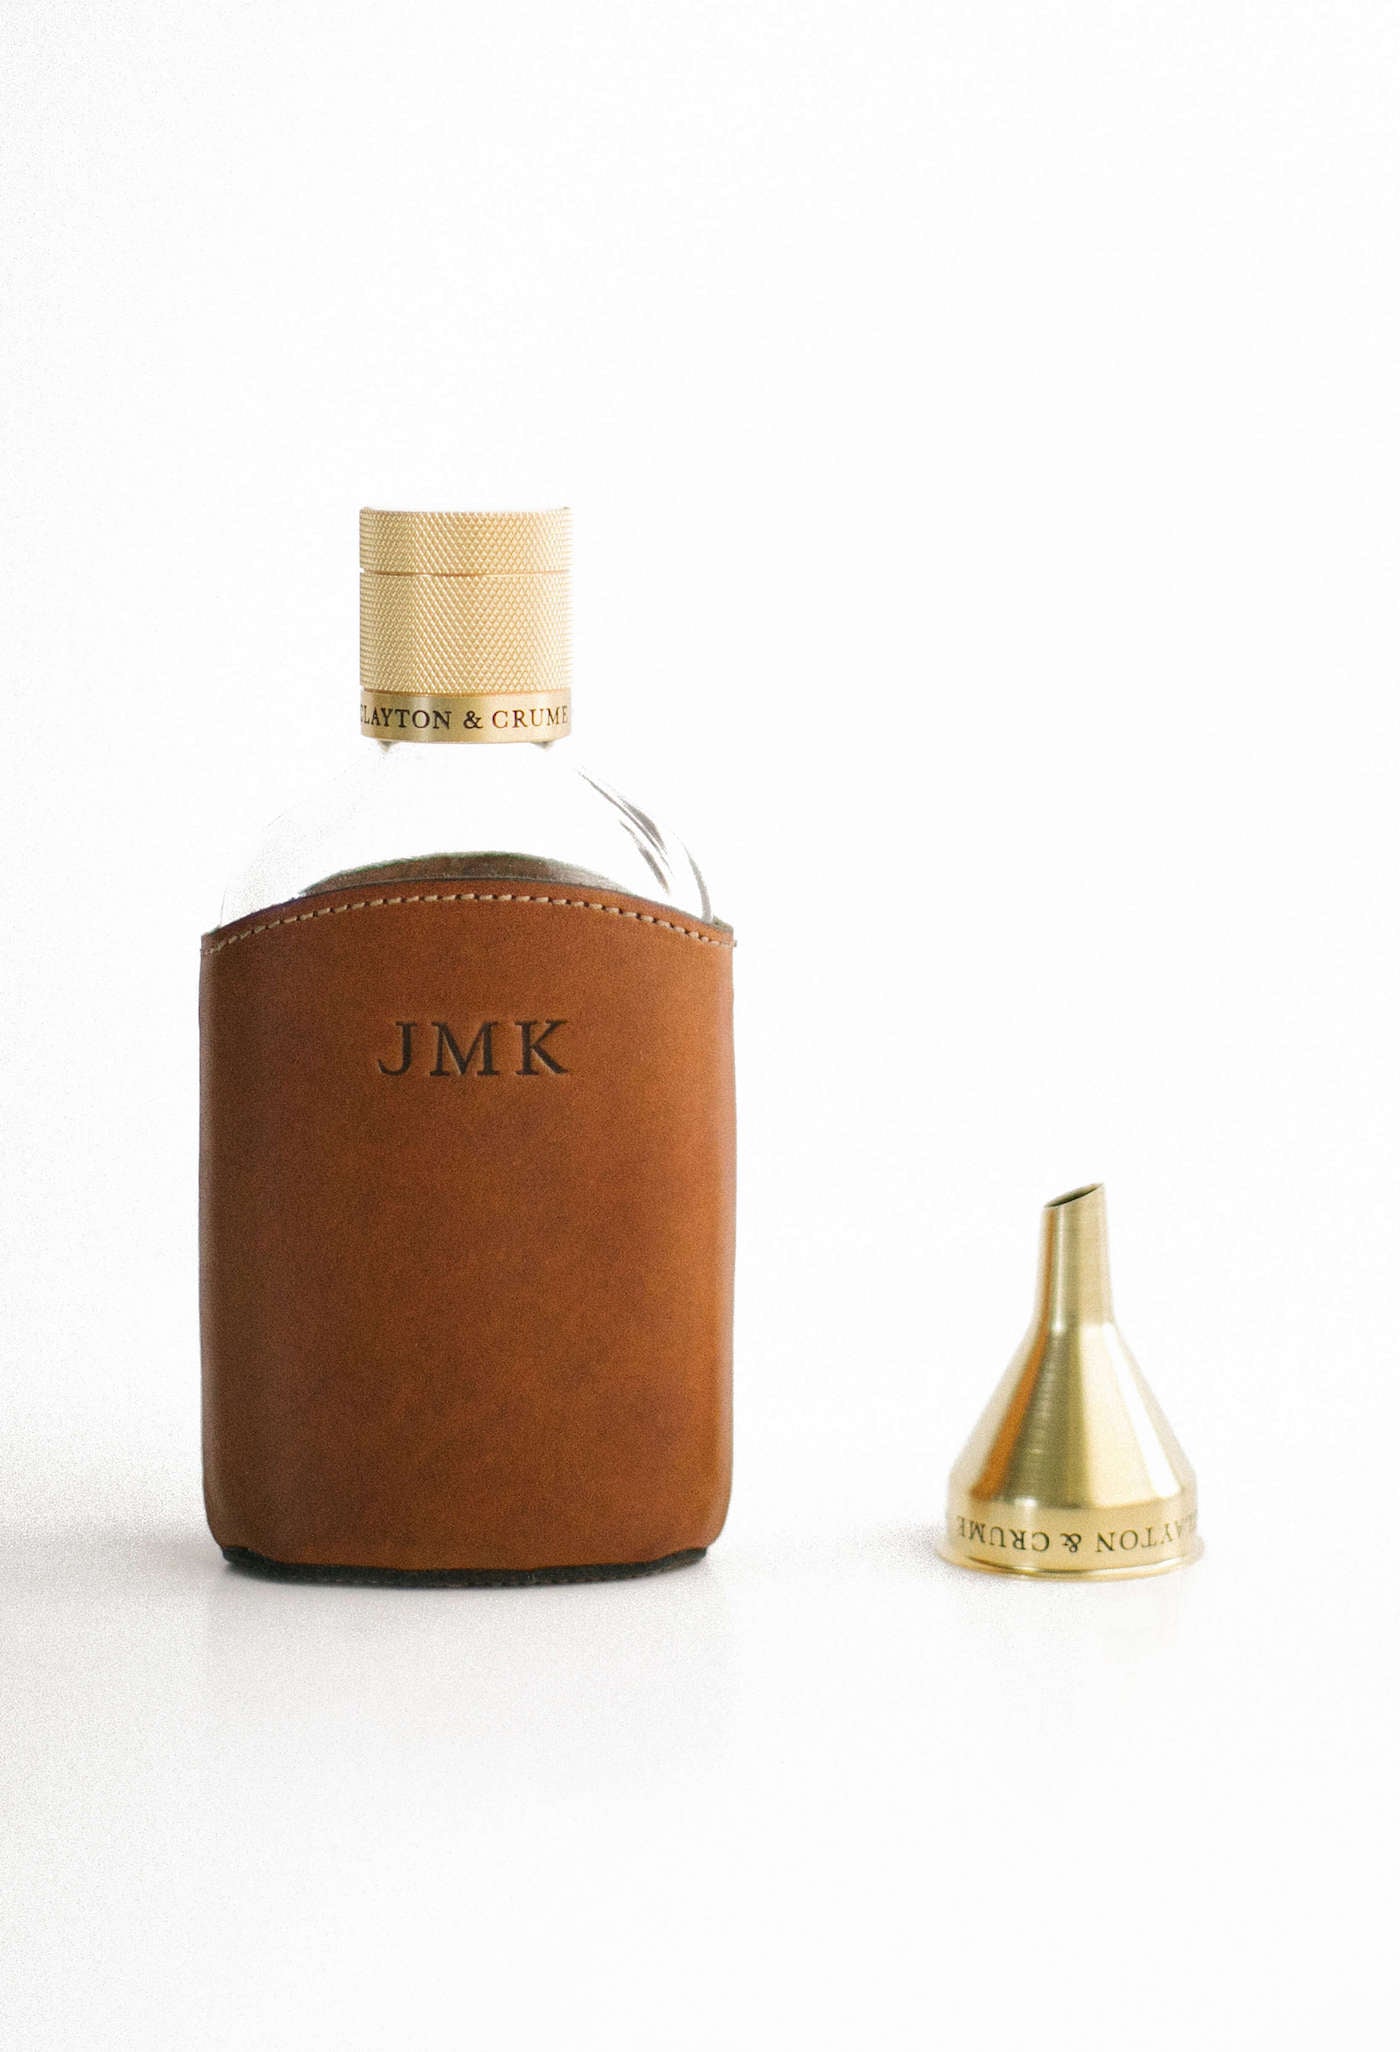 (Medium, Turquoise) - The Original WineRack Booze Bra Flask - Brand New  Adjustable Design - Holds 740ml of Booze (Turquoise, Medium) : :  Home